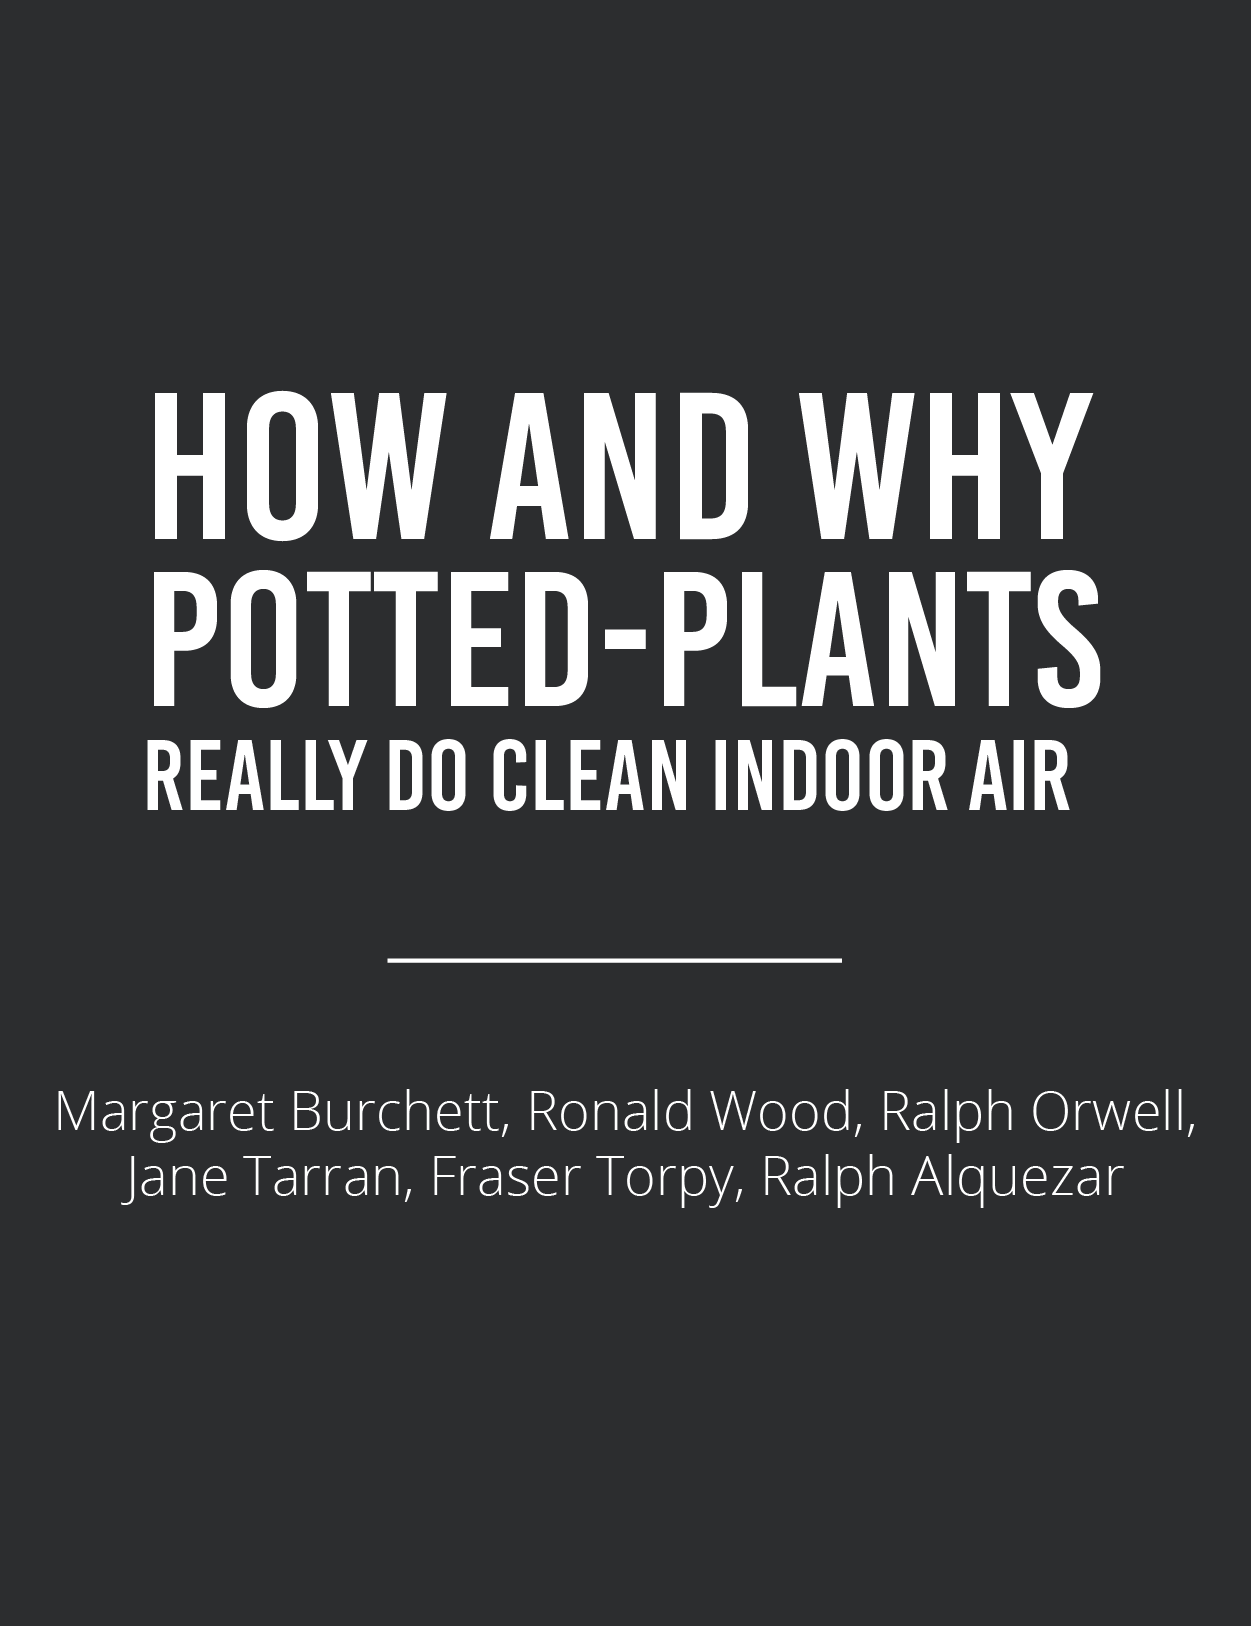 plants clean indoor air